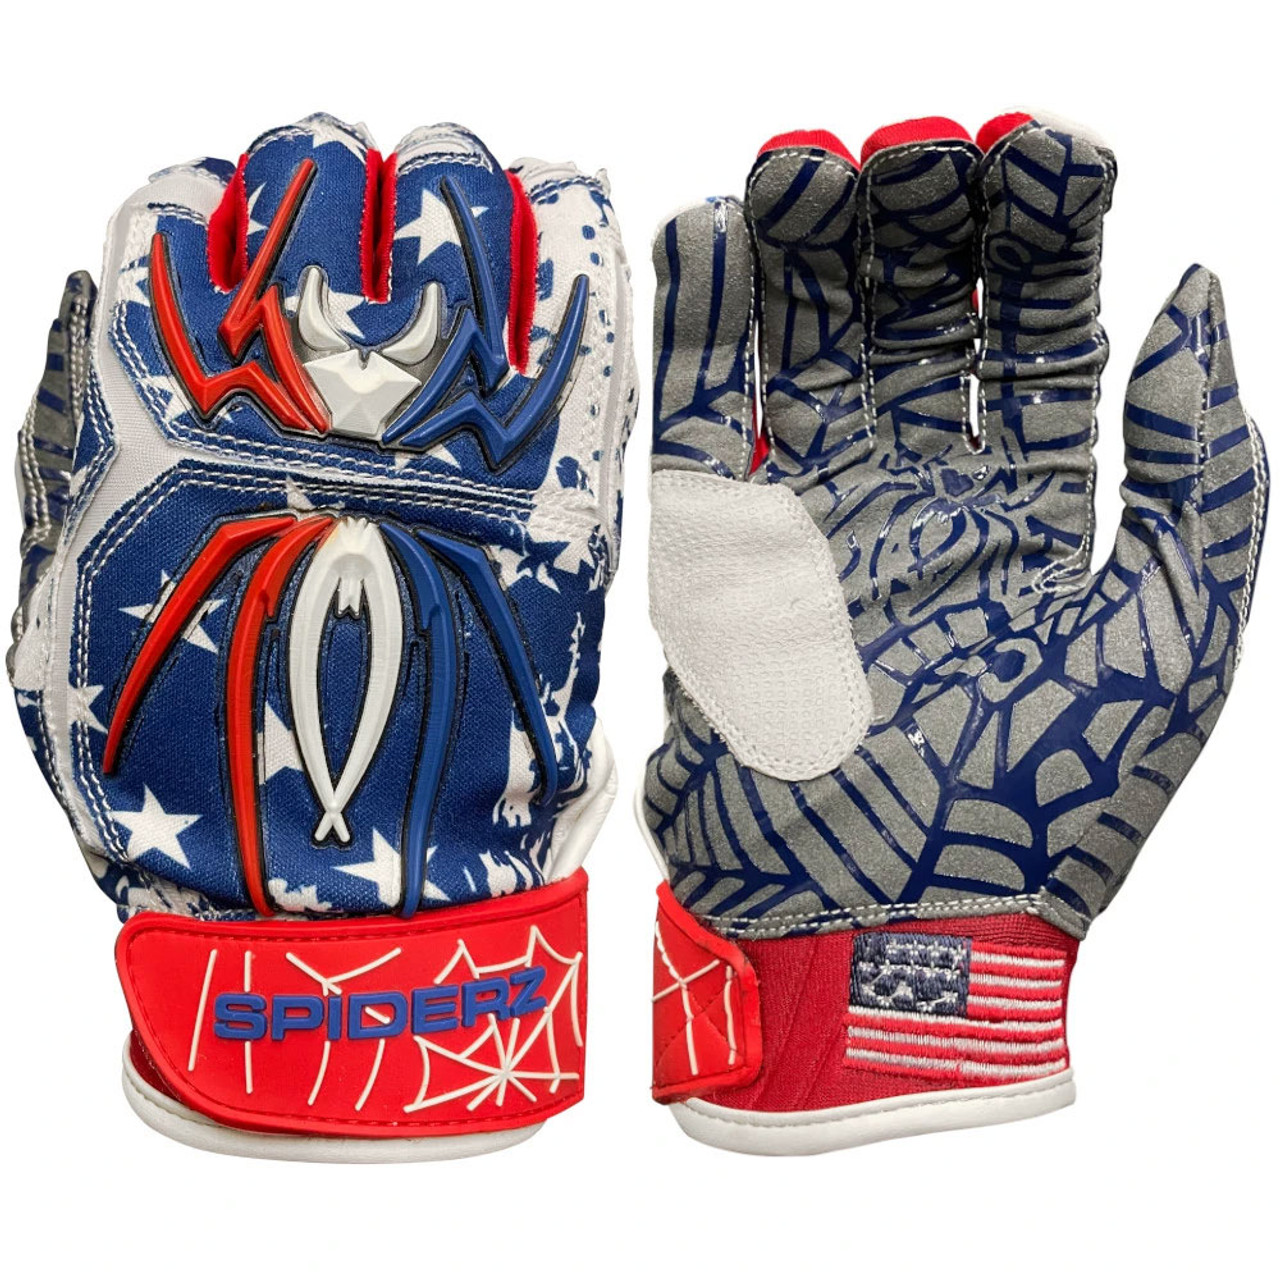 Spiderz Hybrid Baseball/Softball Batting Gloves